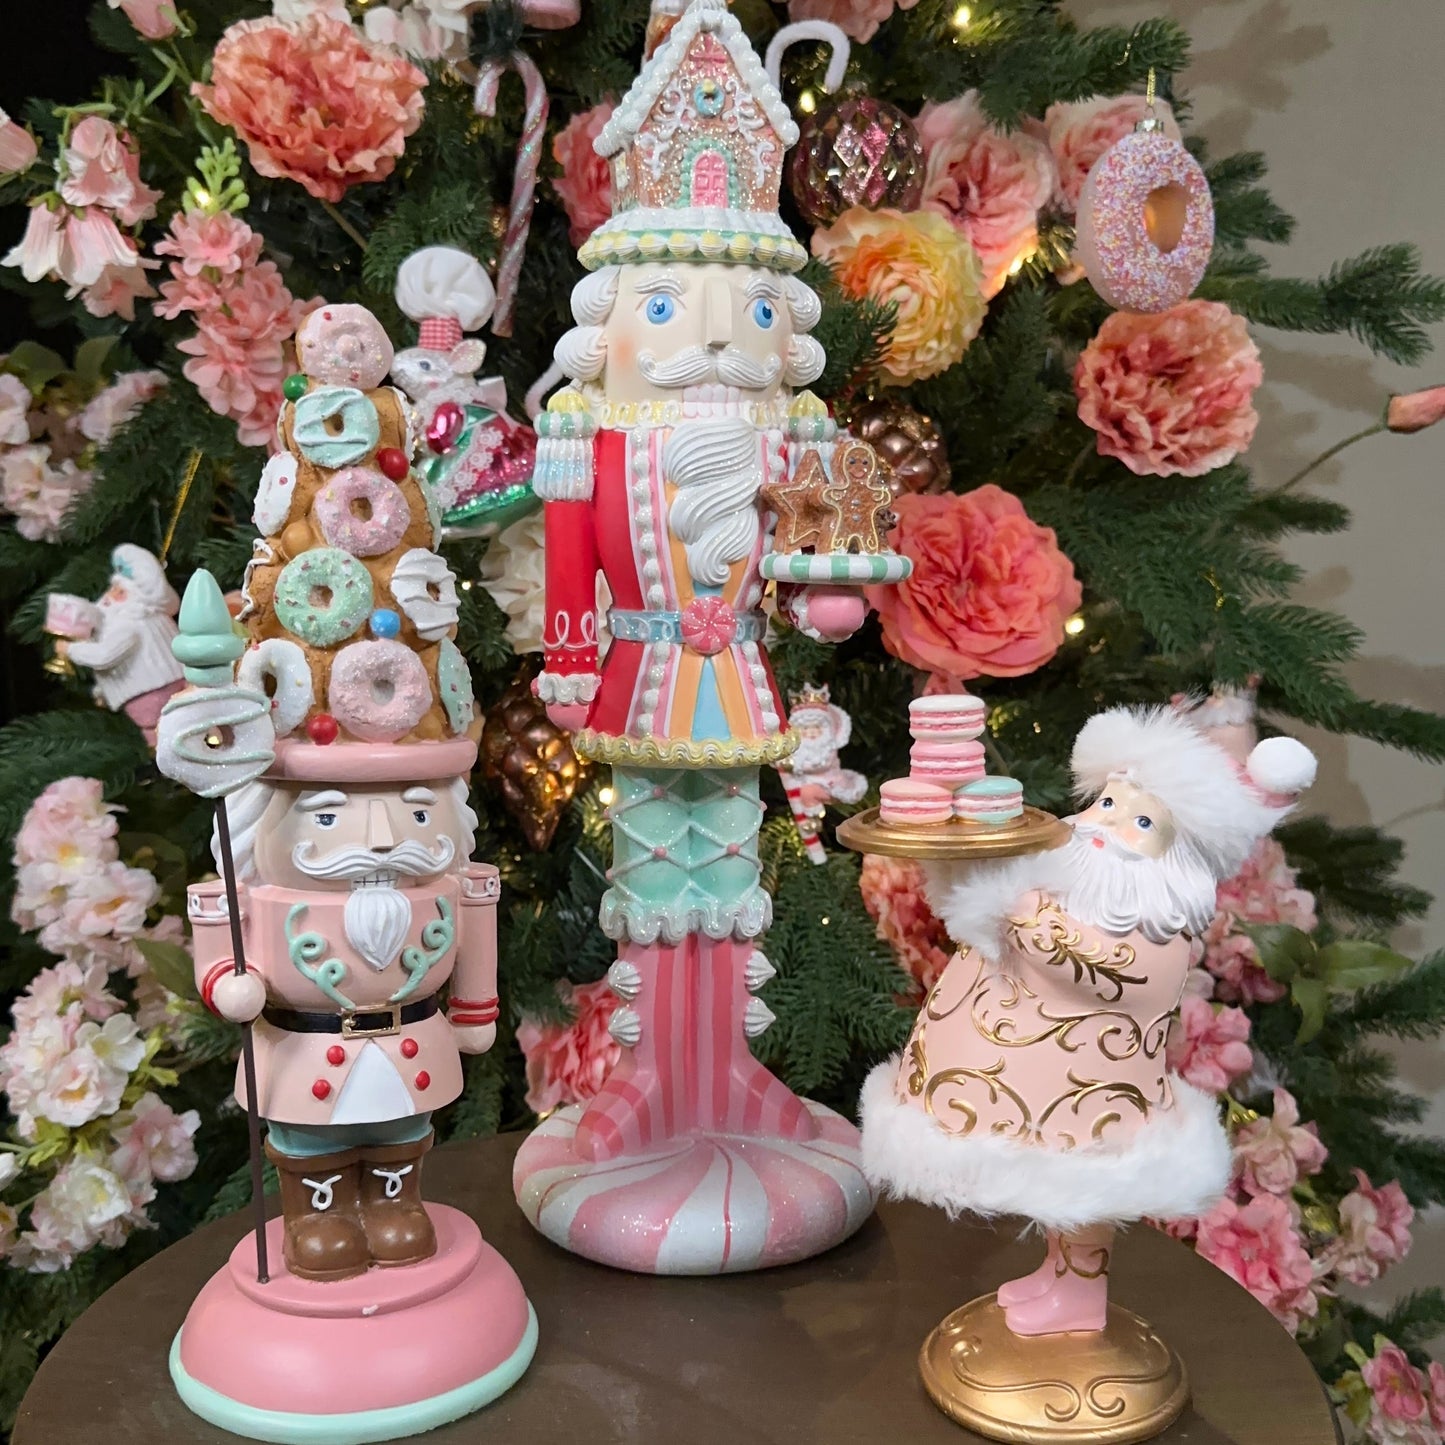 Viv! Christmas Kerstbeeld - Kerstman met Macaron - roze wit goud - 22cm